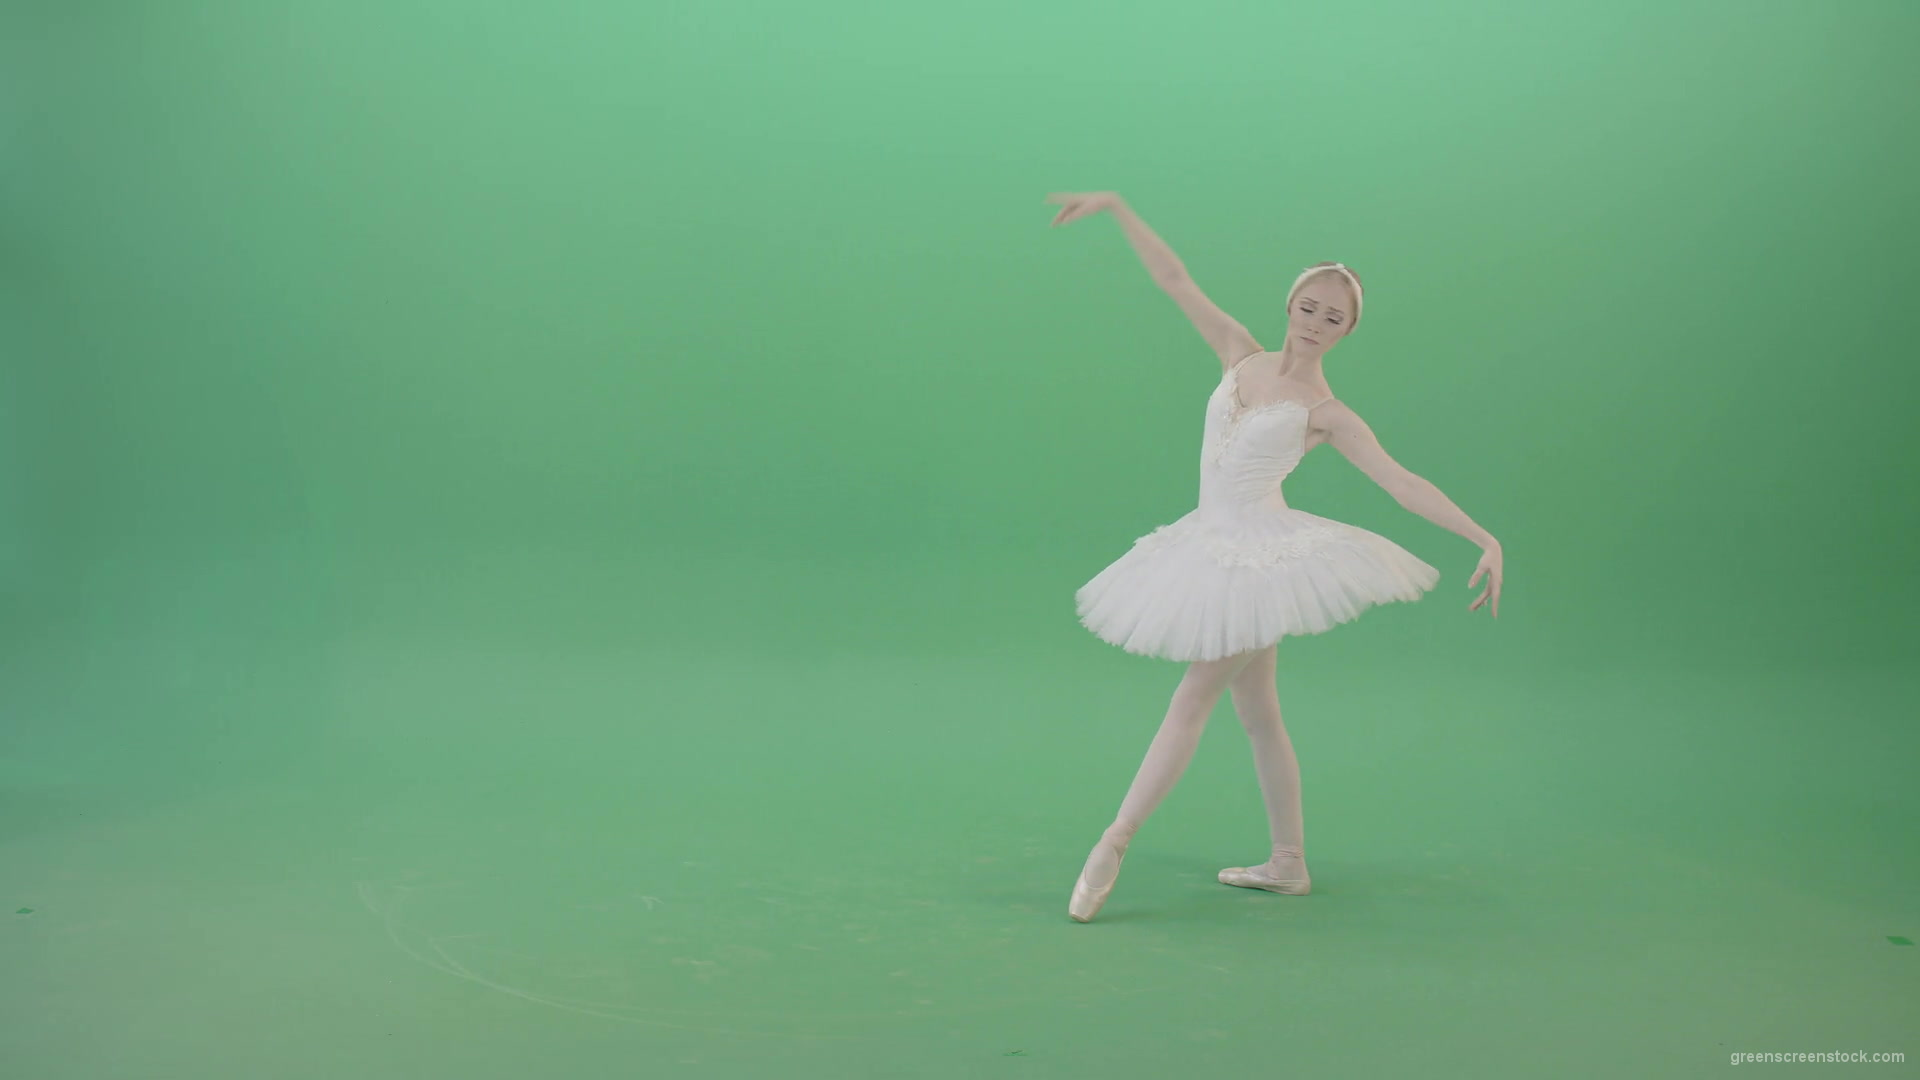 vj video background Elegant-snowwhite-ballet-dancer-ballerina-dancing-isolated-on-Green-Screen-4K-Video-Footage-1920_003